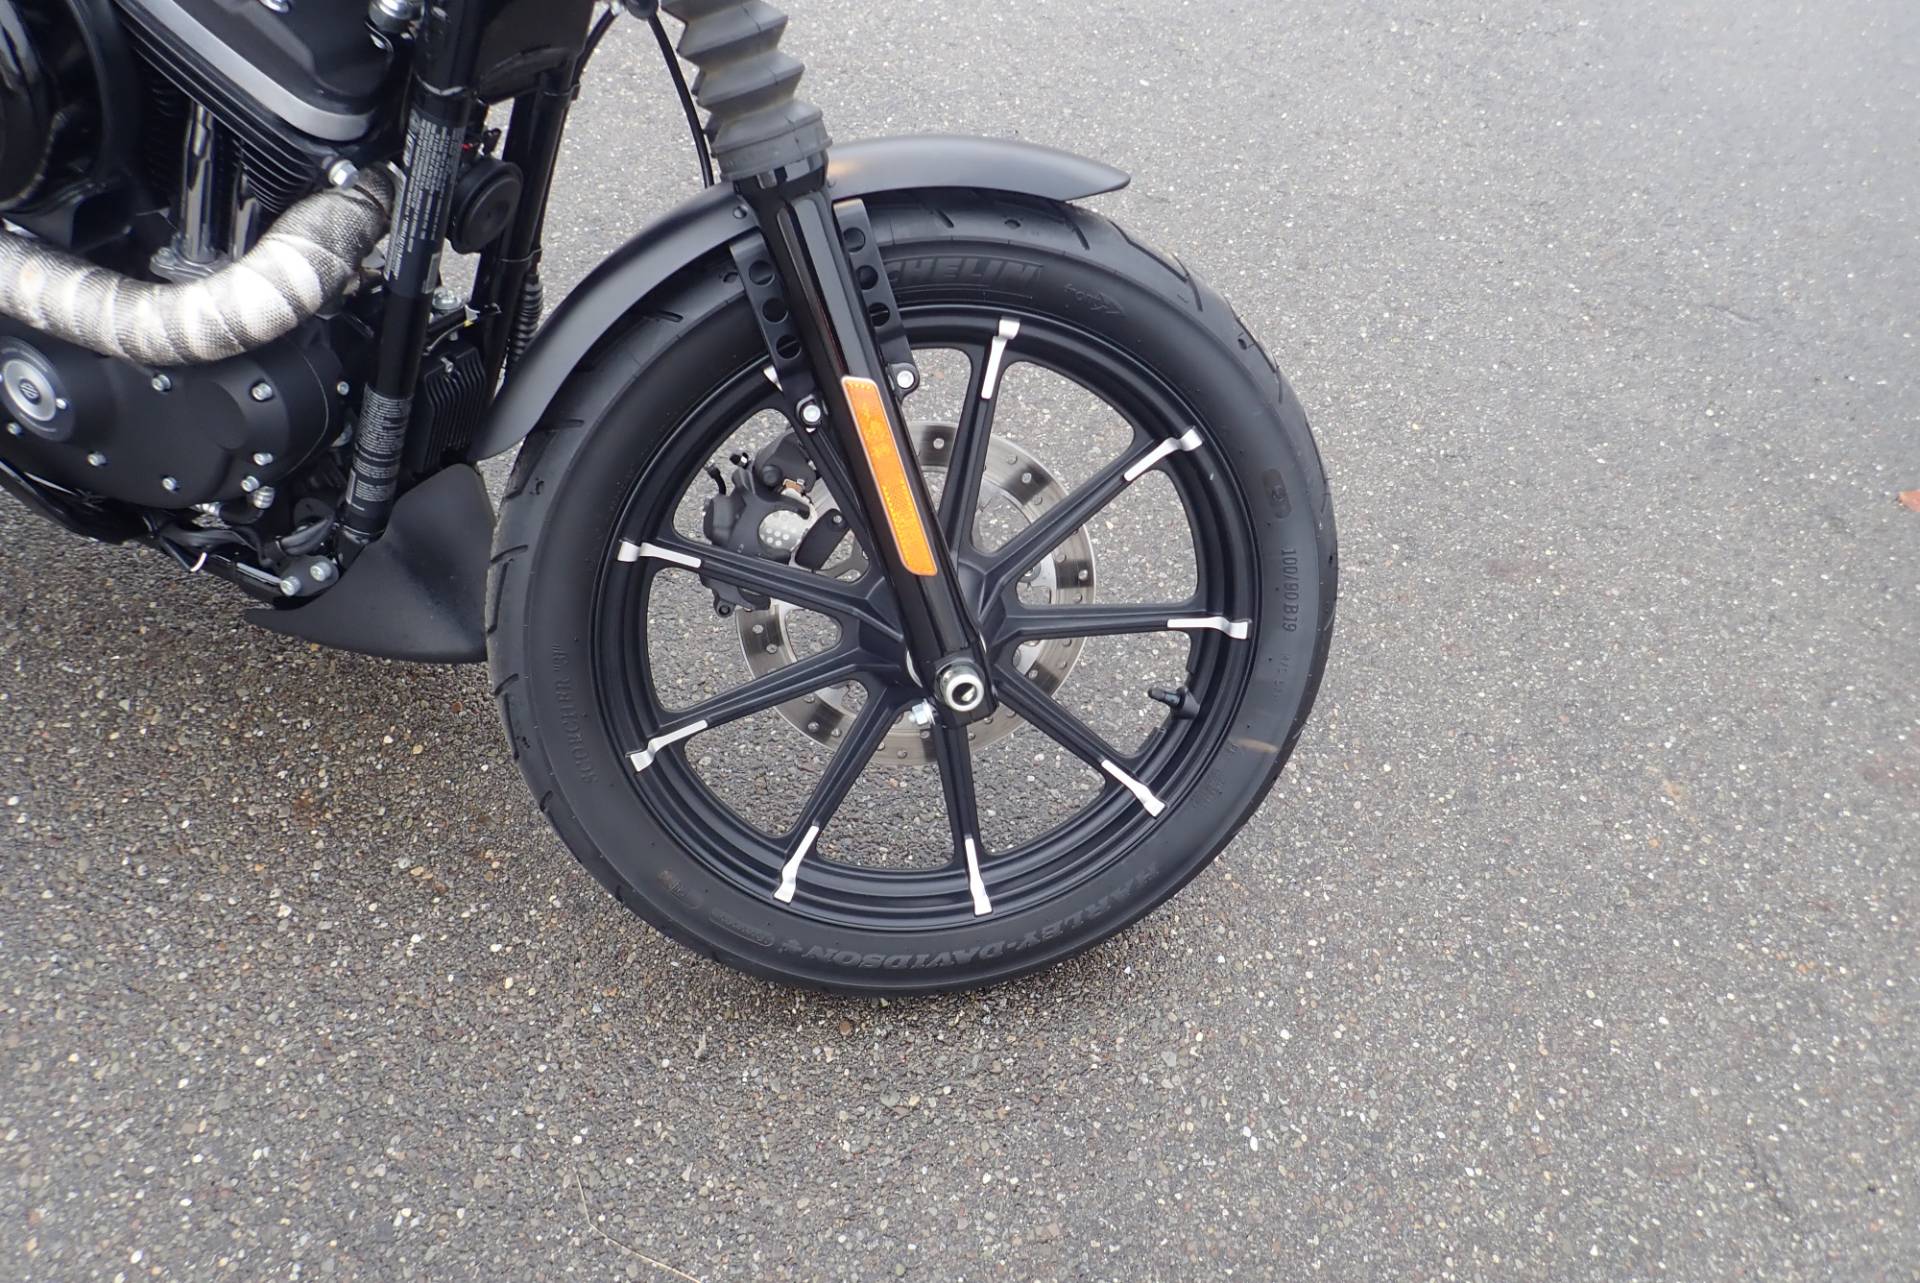 2020 Harley-Davidson Iron 883™ in Massillon, Ohio - Photo 5